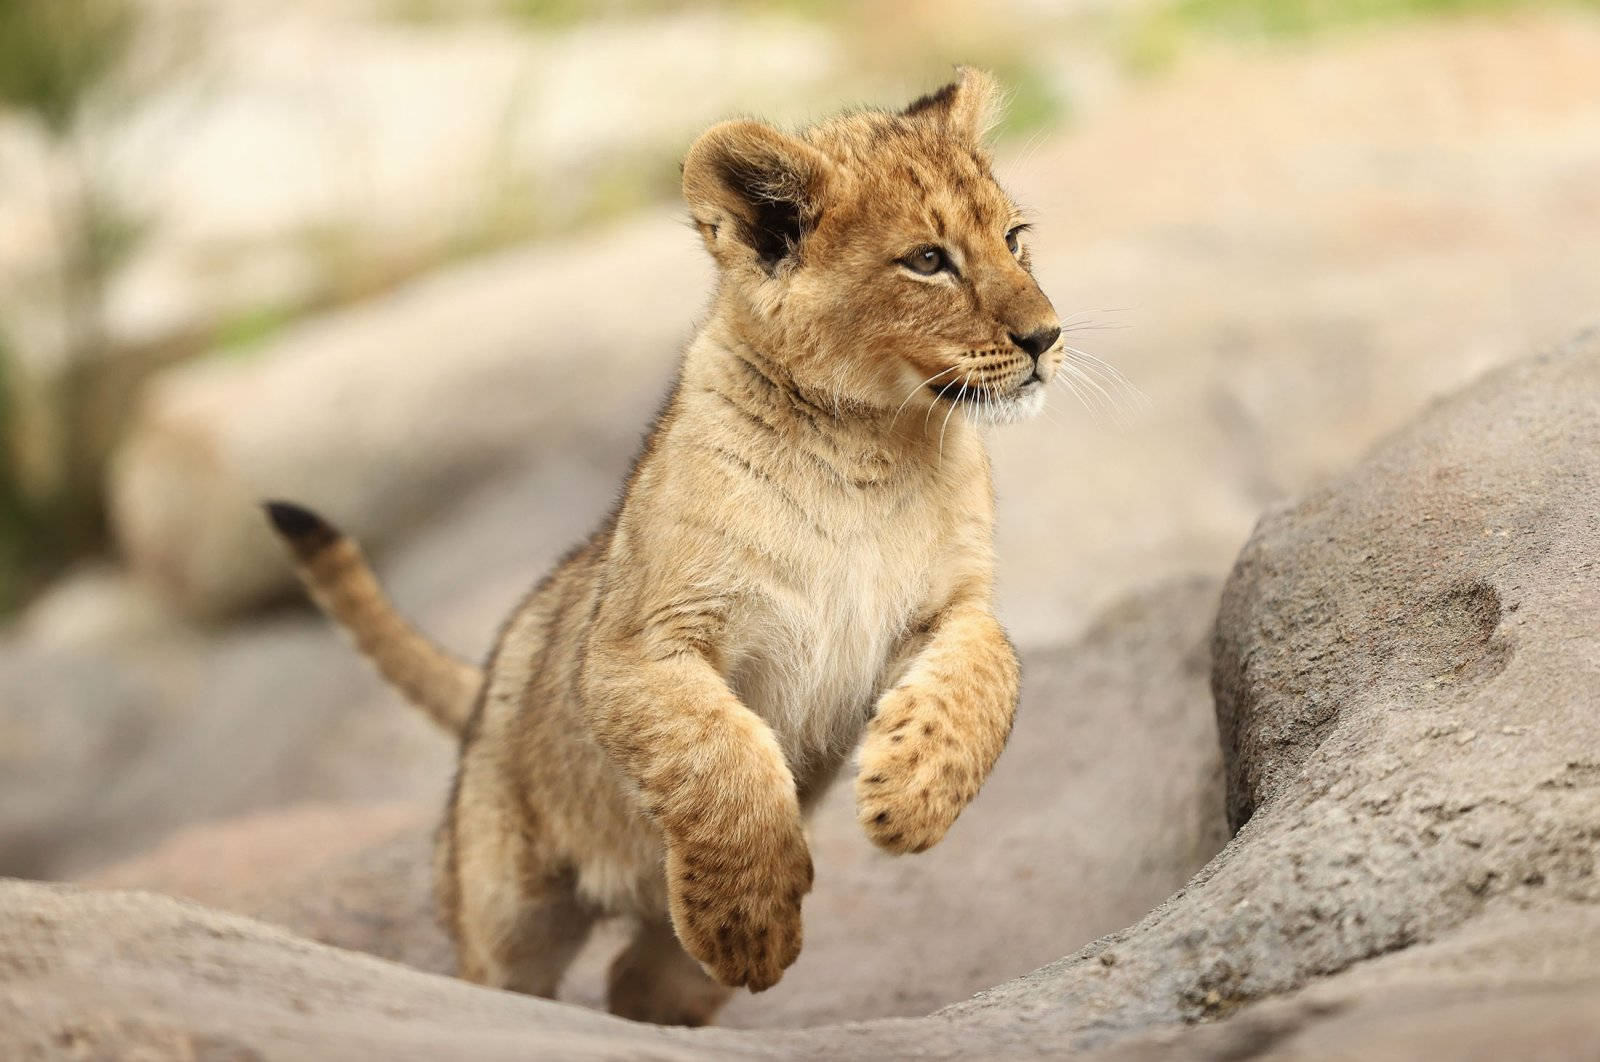 Baby Lion Mid-jump